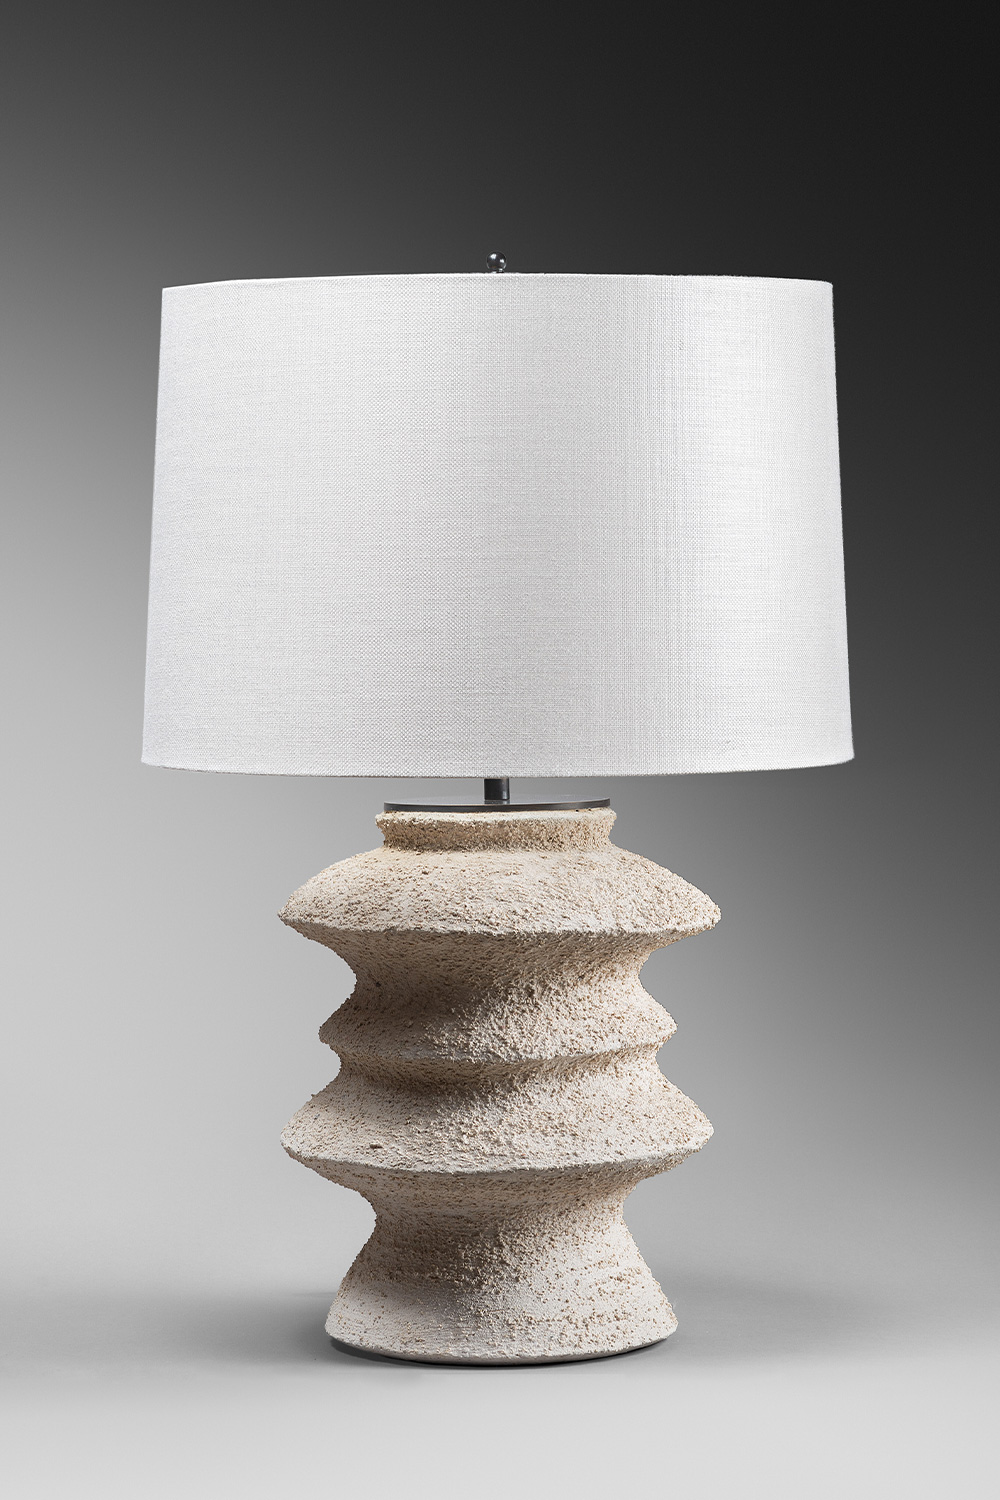 Textured white sculptural lamp